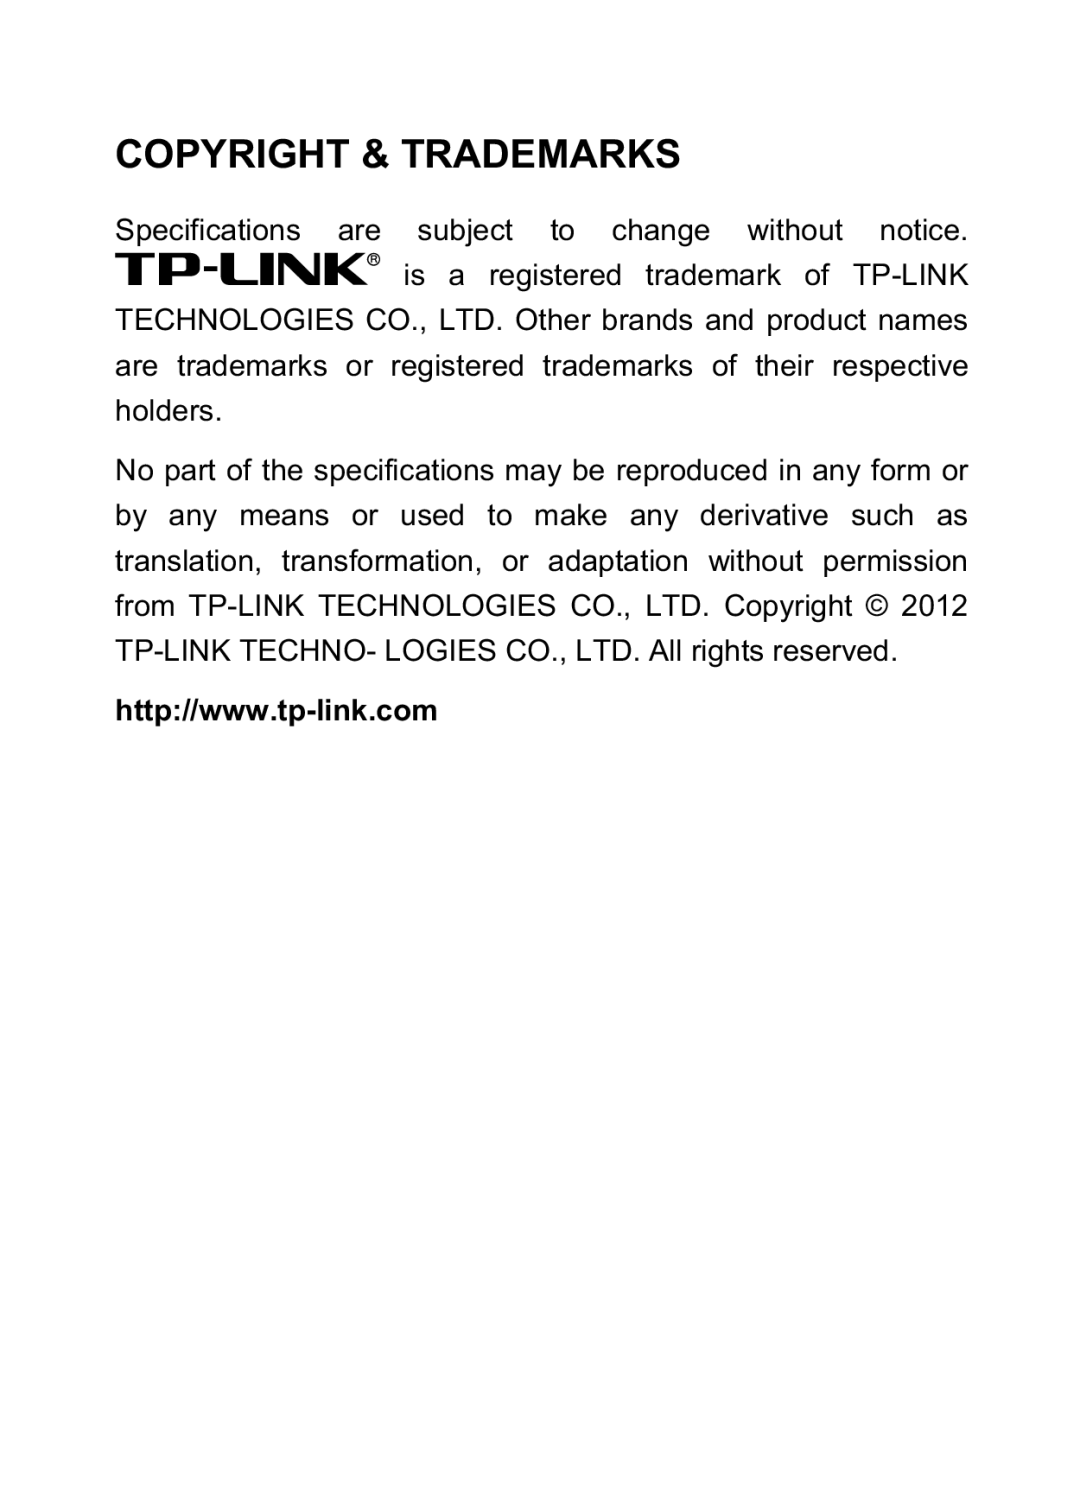 TP-Link TL-SG1008P manual Copyright & Trademarks 